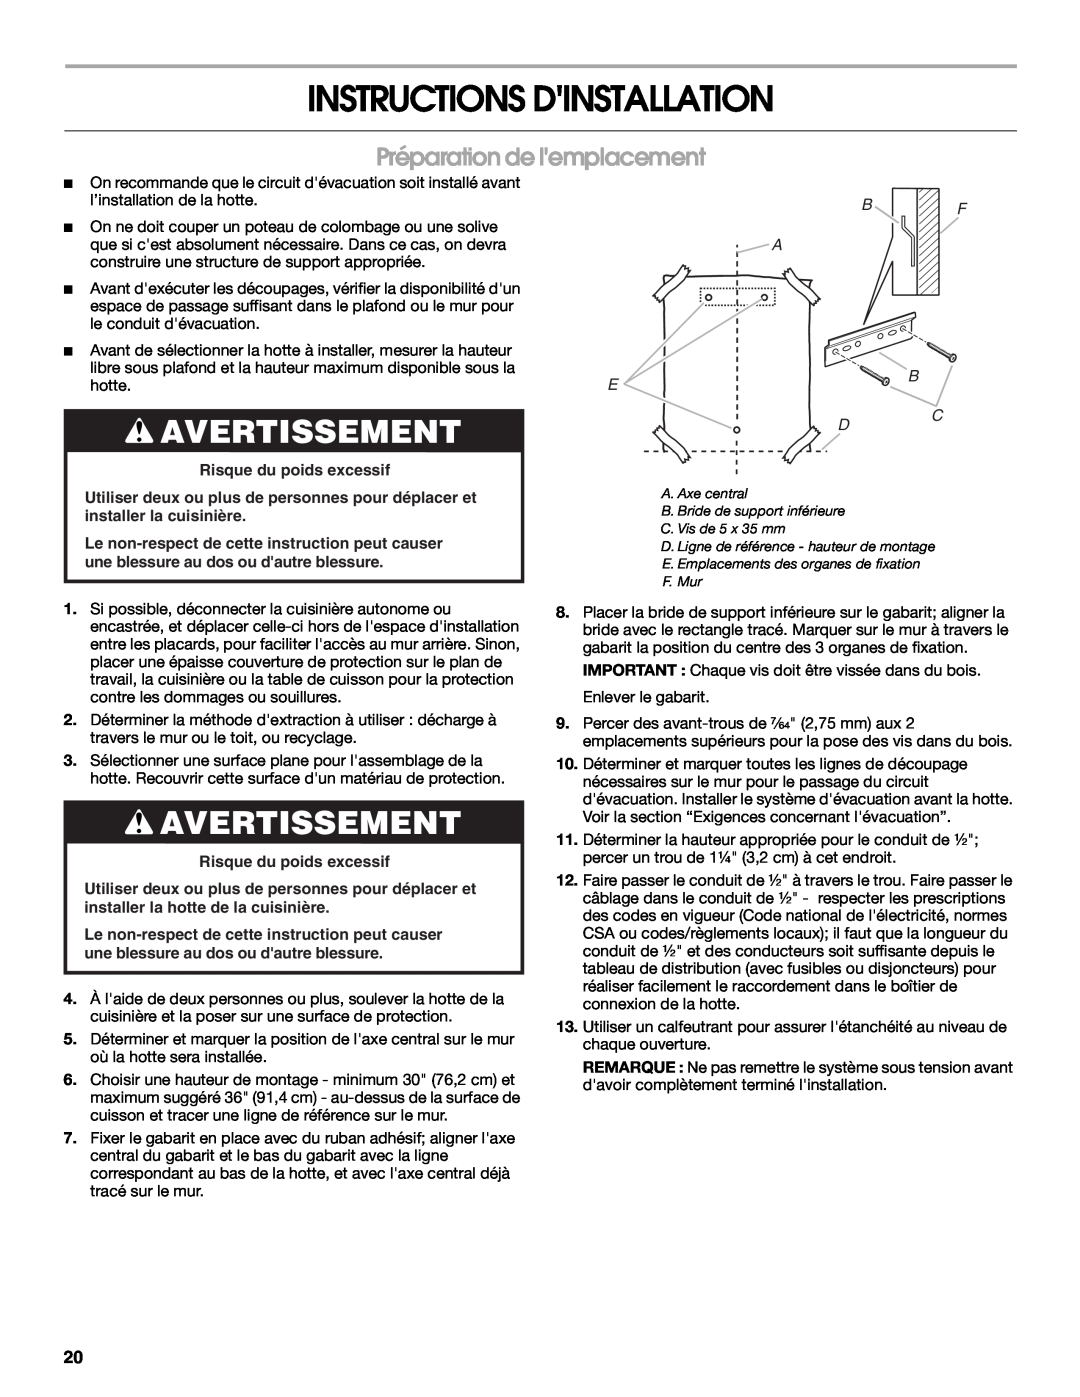 Whirlpool W10018010 installation instructions Instructions Dinstallation, Avertissement, Préparation de lemplacement, hotte 